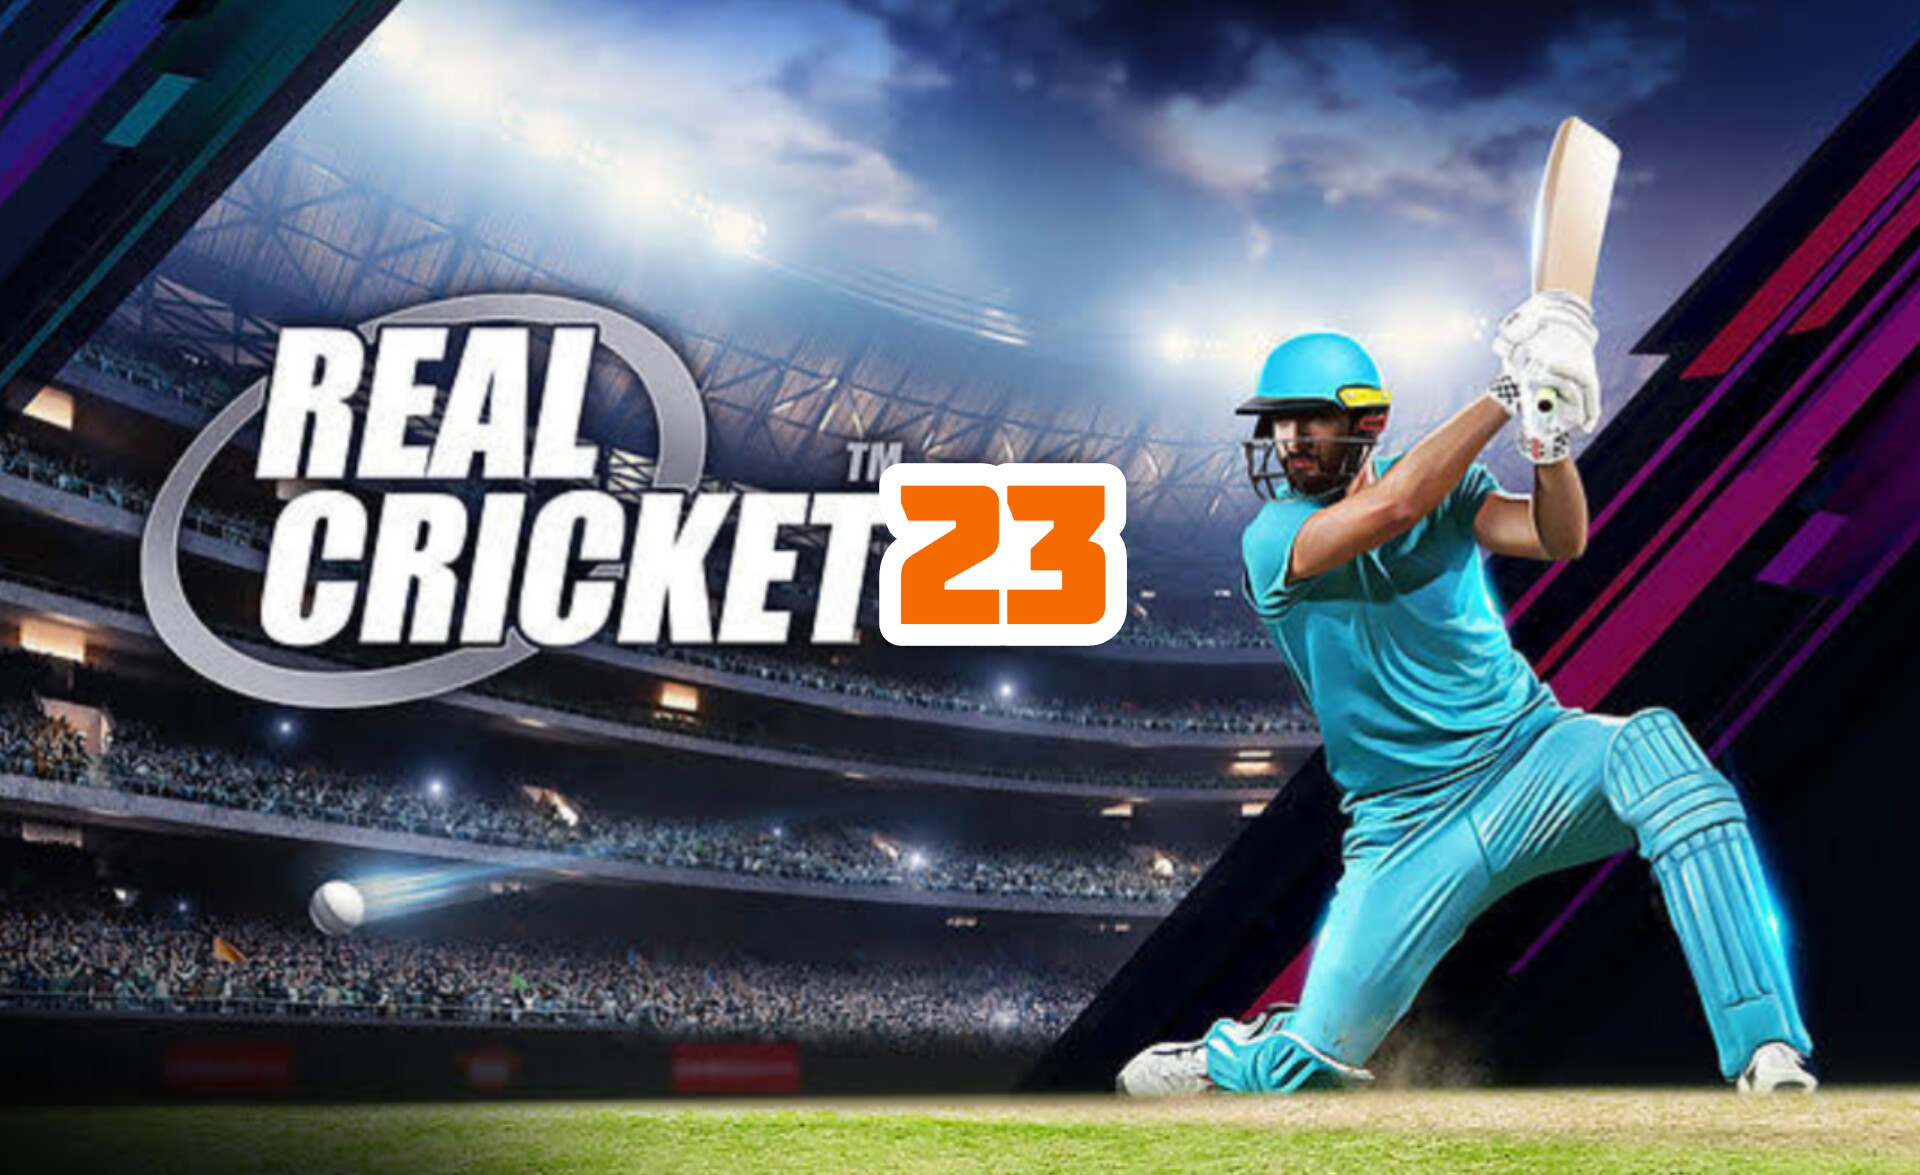 Real Cricket™ 23